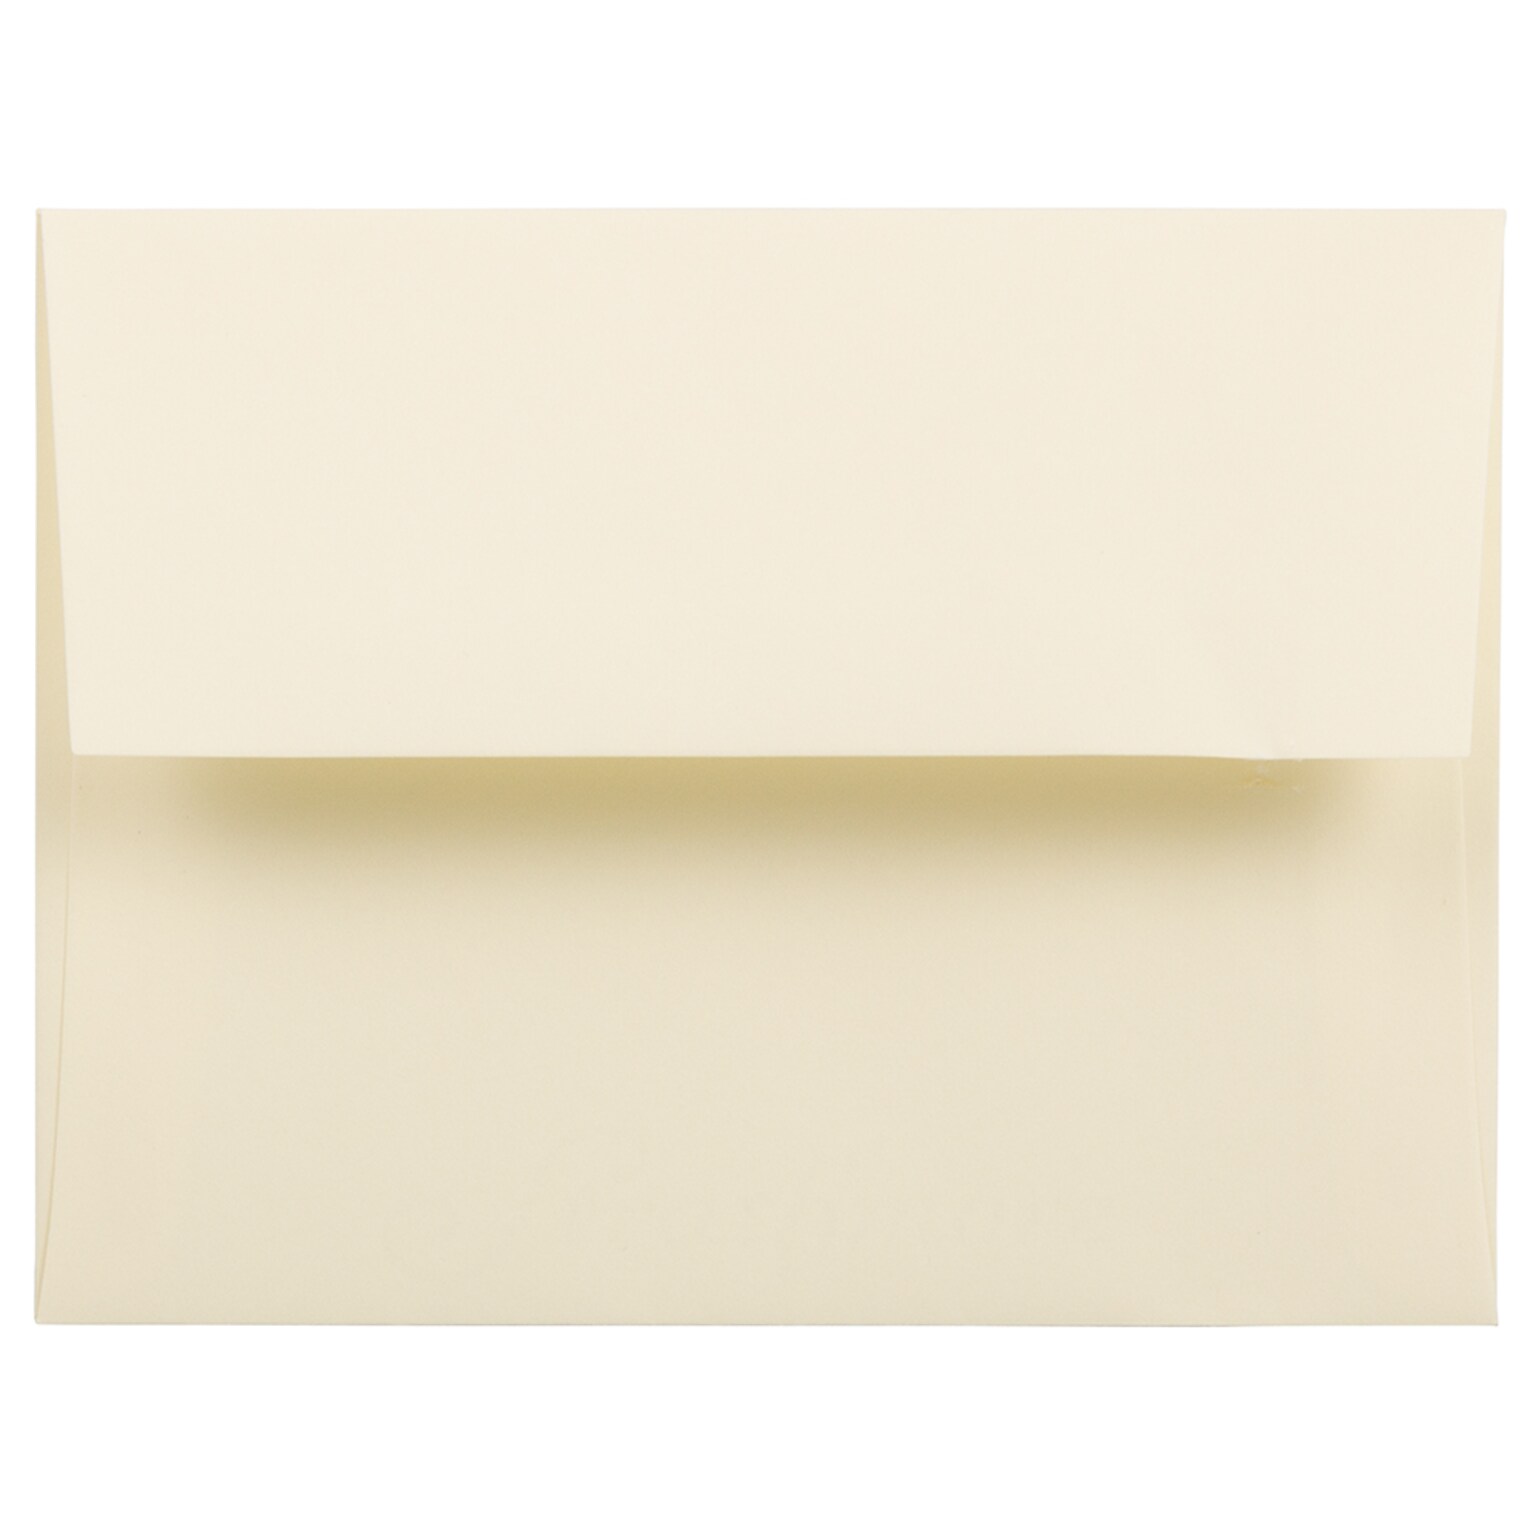 JAM Paper® A2 Strathmore Invitation Envelopes, 4.375 x 5.75, Ivory Wove, 25/Pack (900919415)